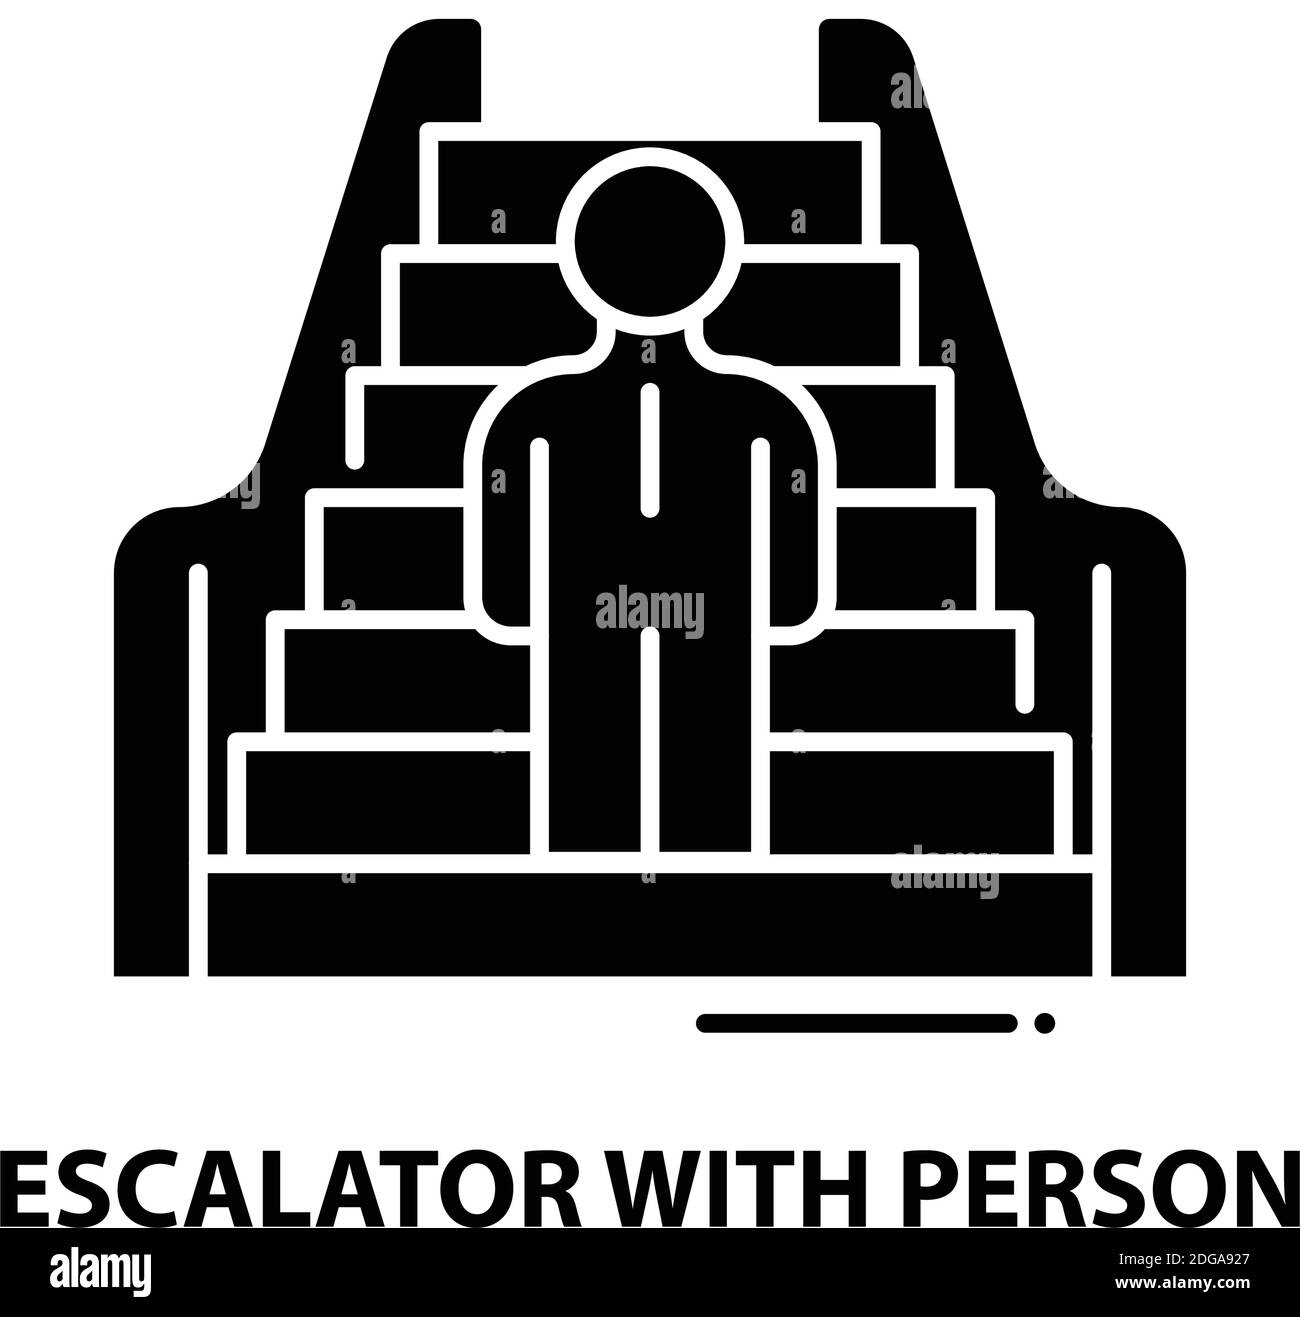 escalator with person icon, black vector sign with editable strokes, concept illustration Stock Vector